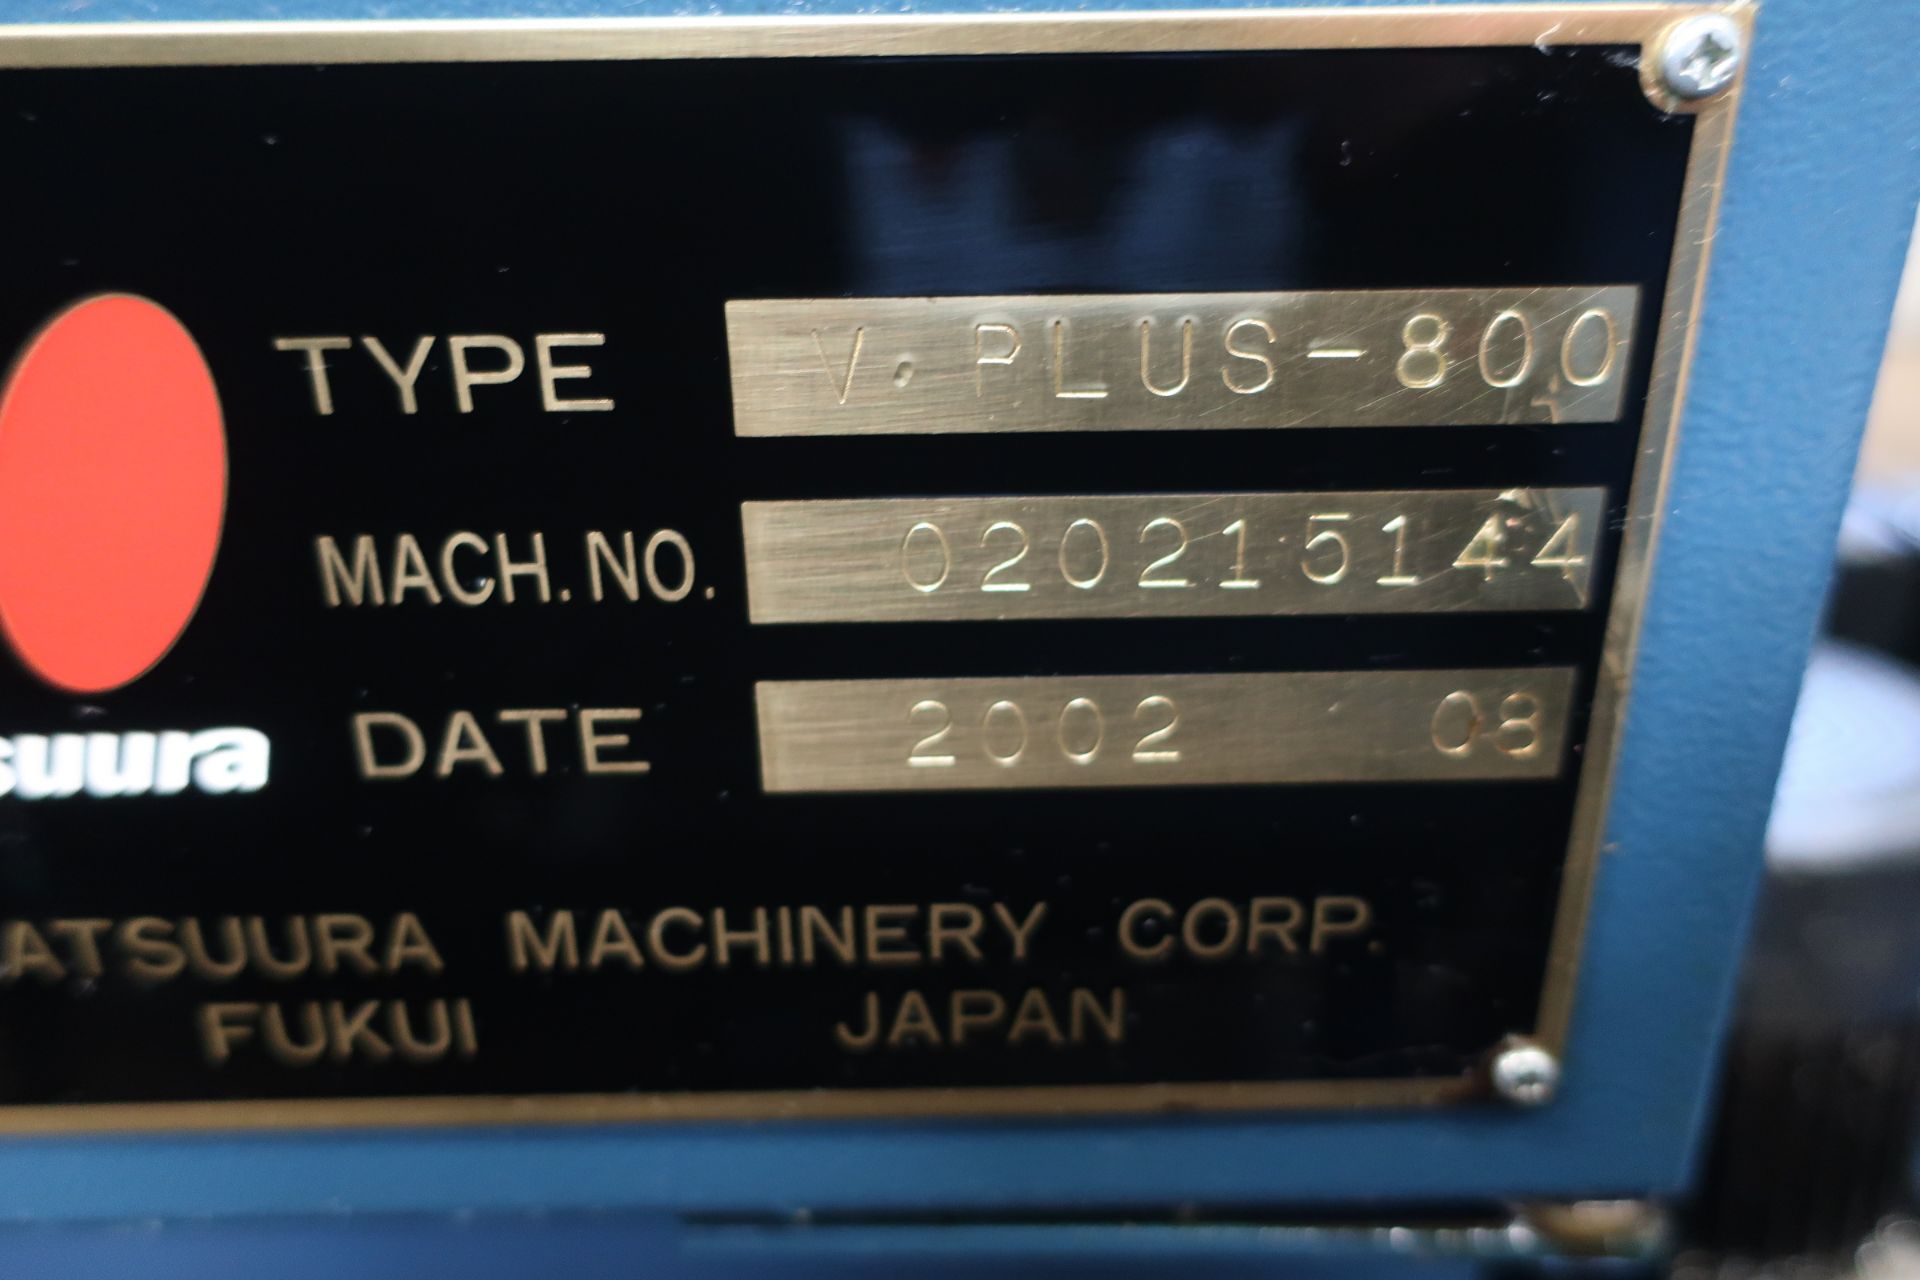 2002 Matsuura V.Plus-800 CNC Vertical Machining Center, SN 020215144 - Image 10 of 11